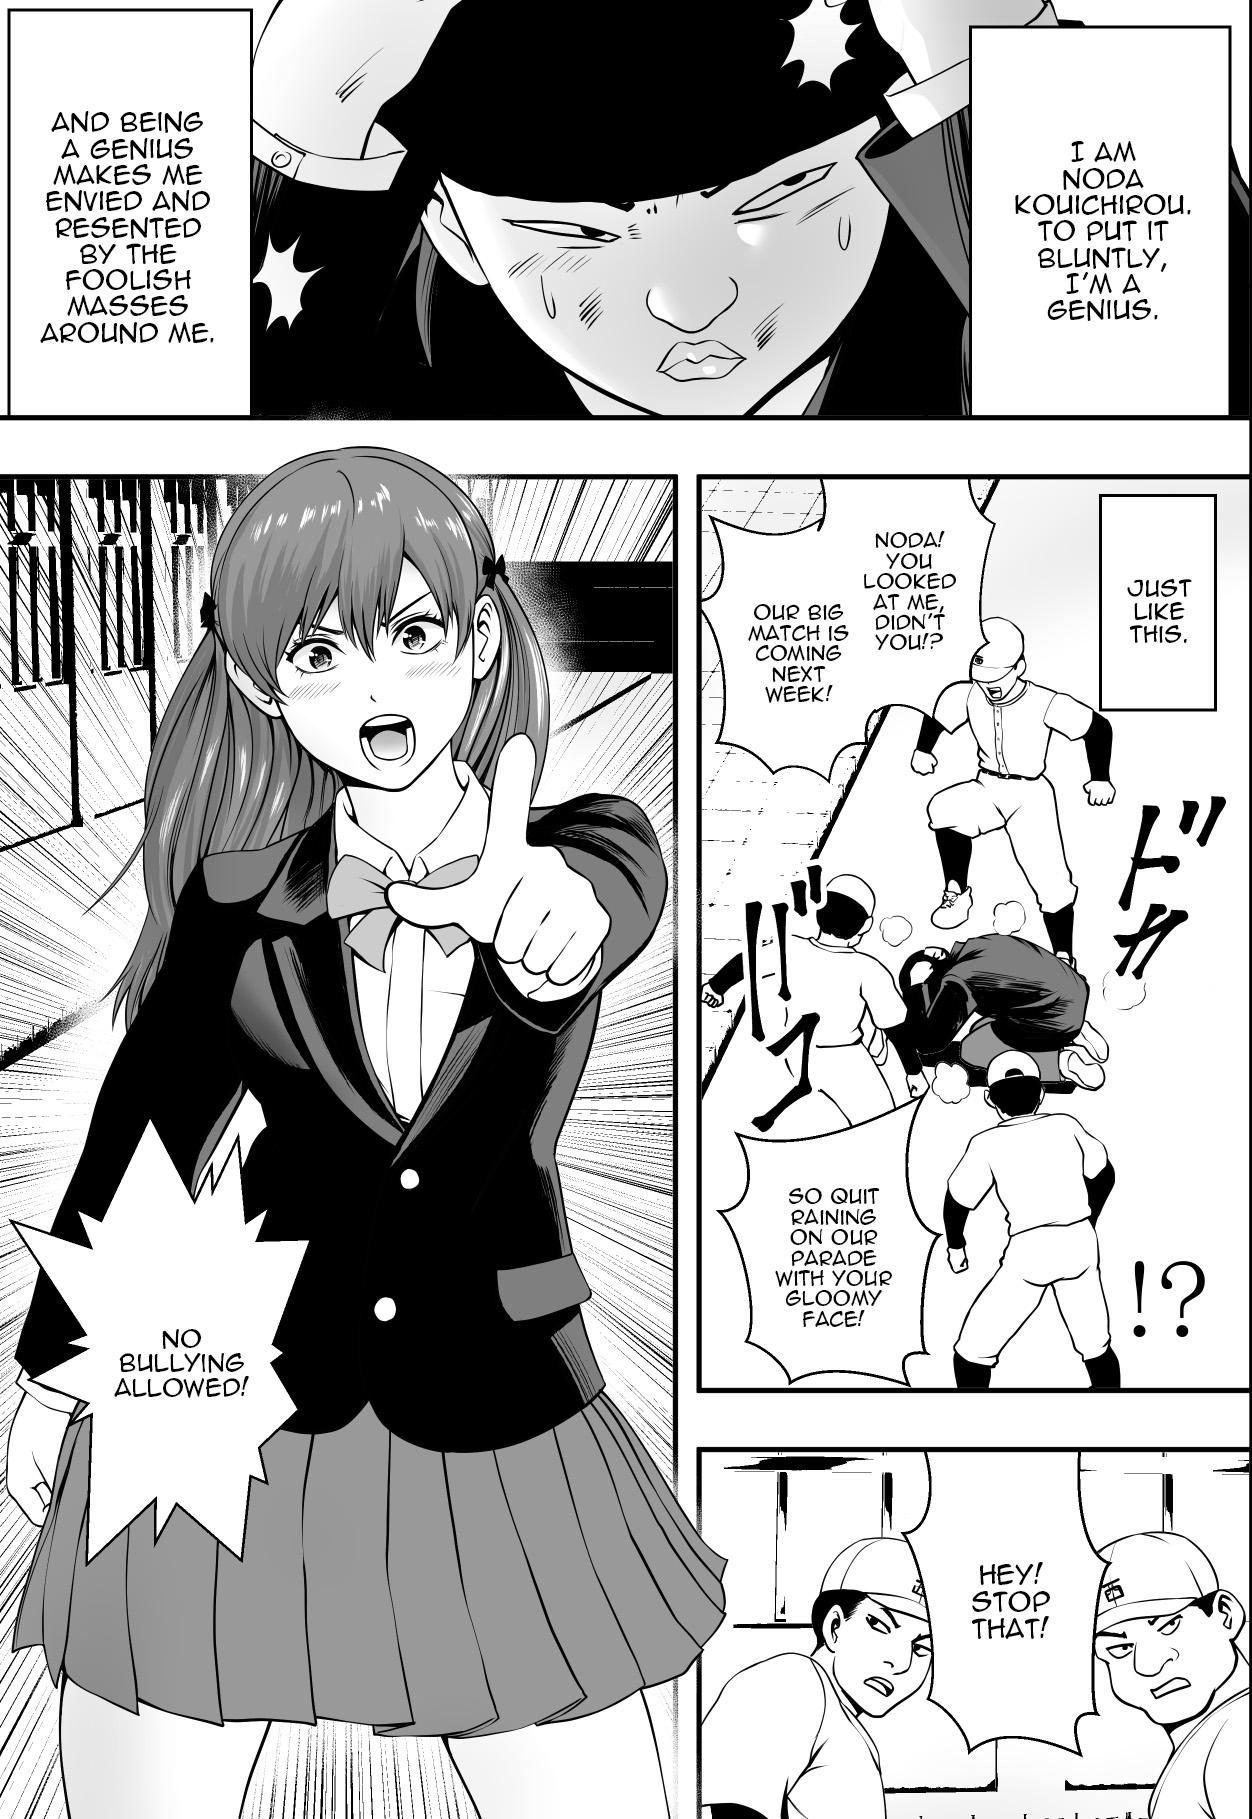 Tinder Haha wa Inu nare, Musume wa Hana nare. - Original Scandal - Page 2